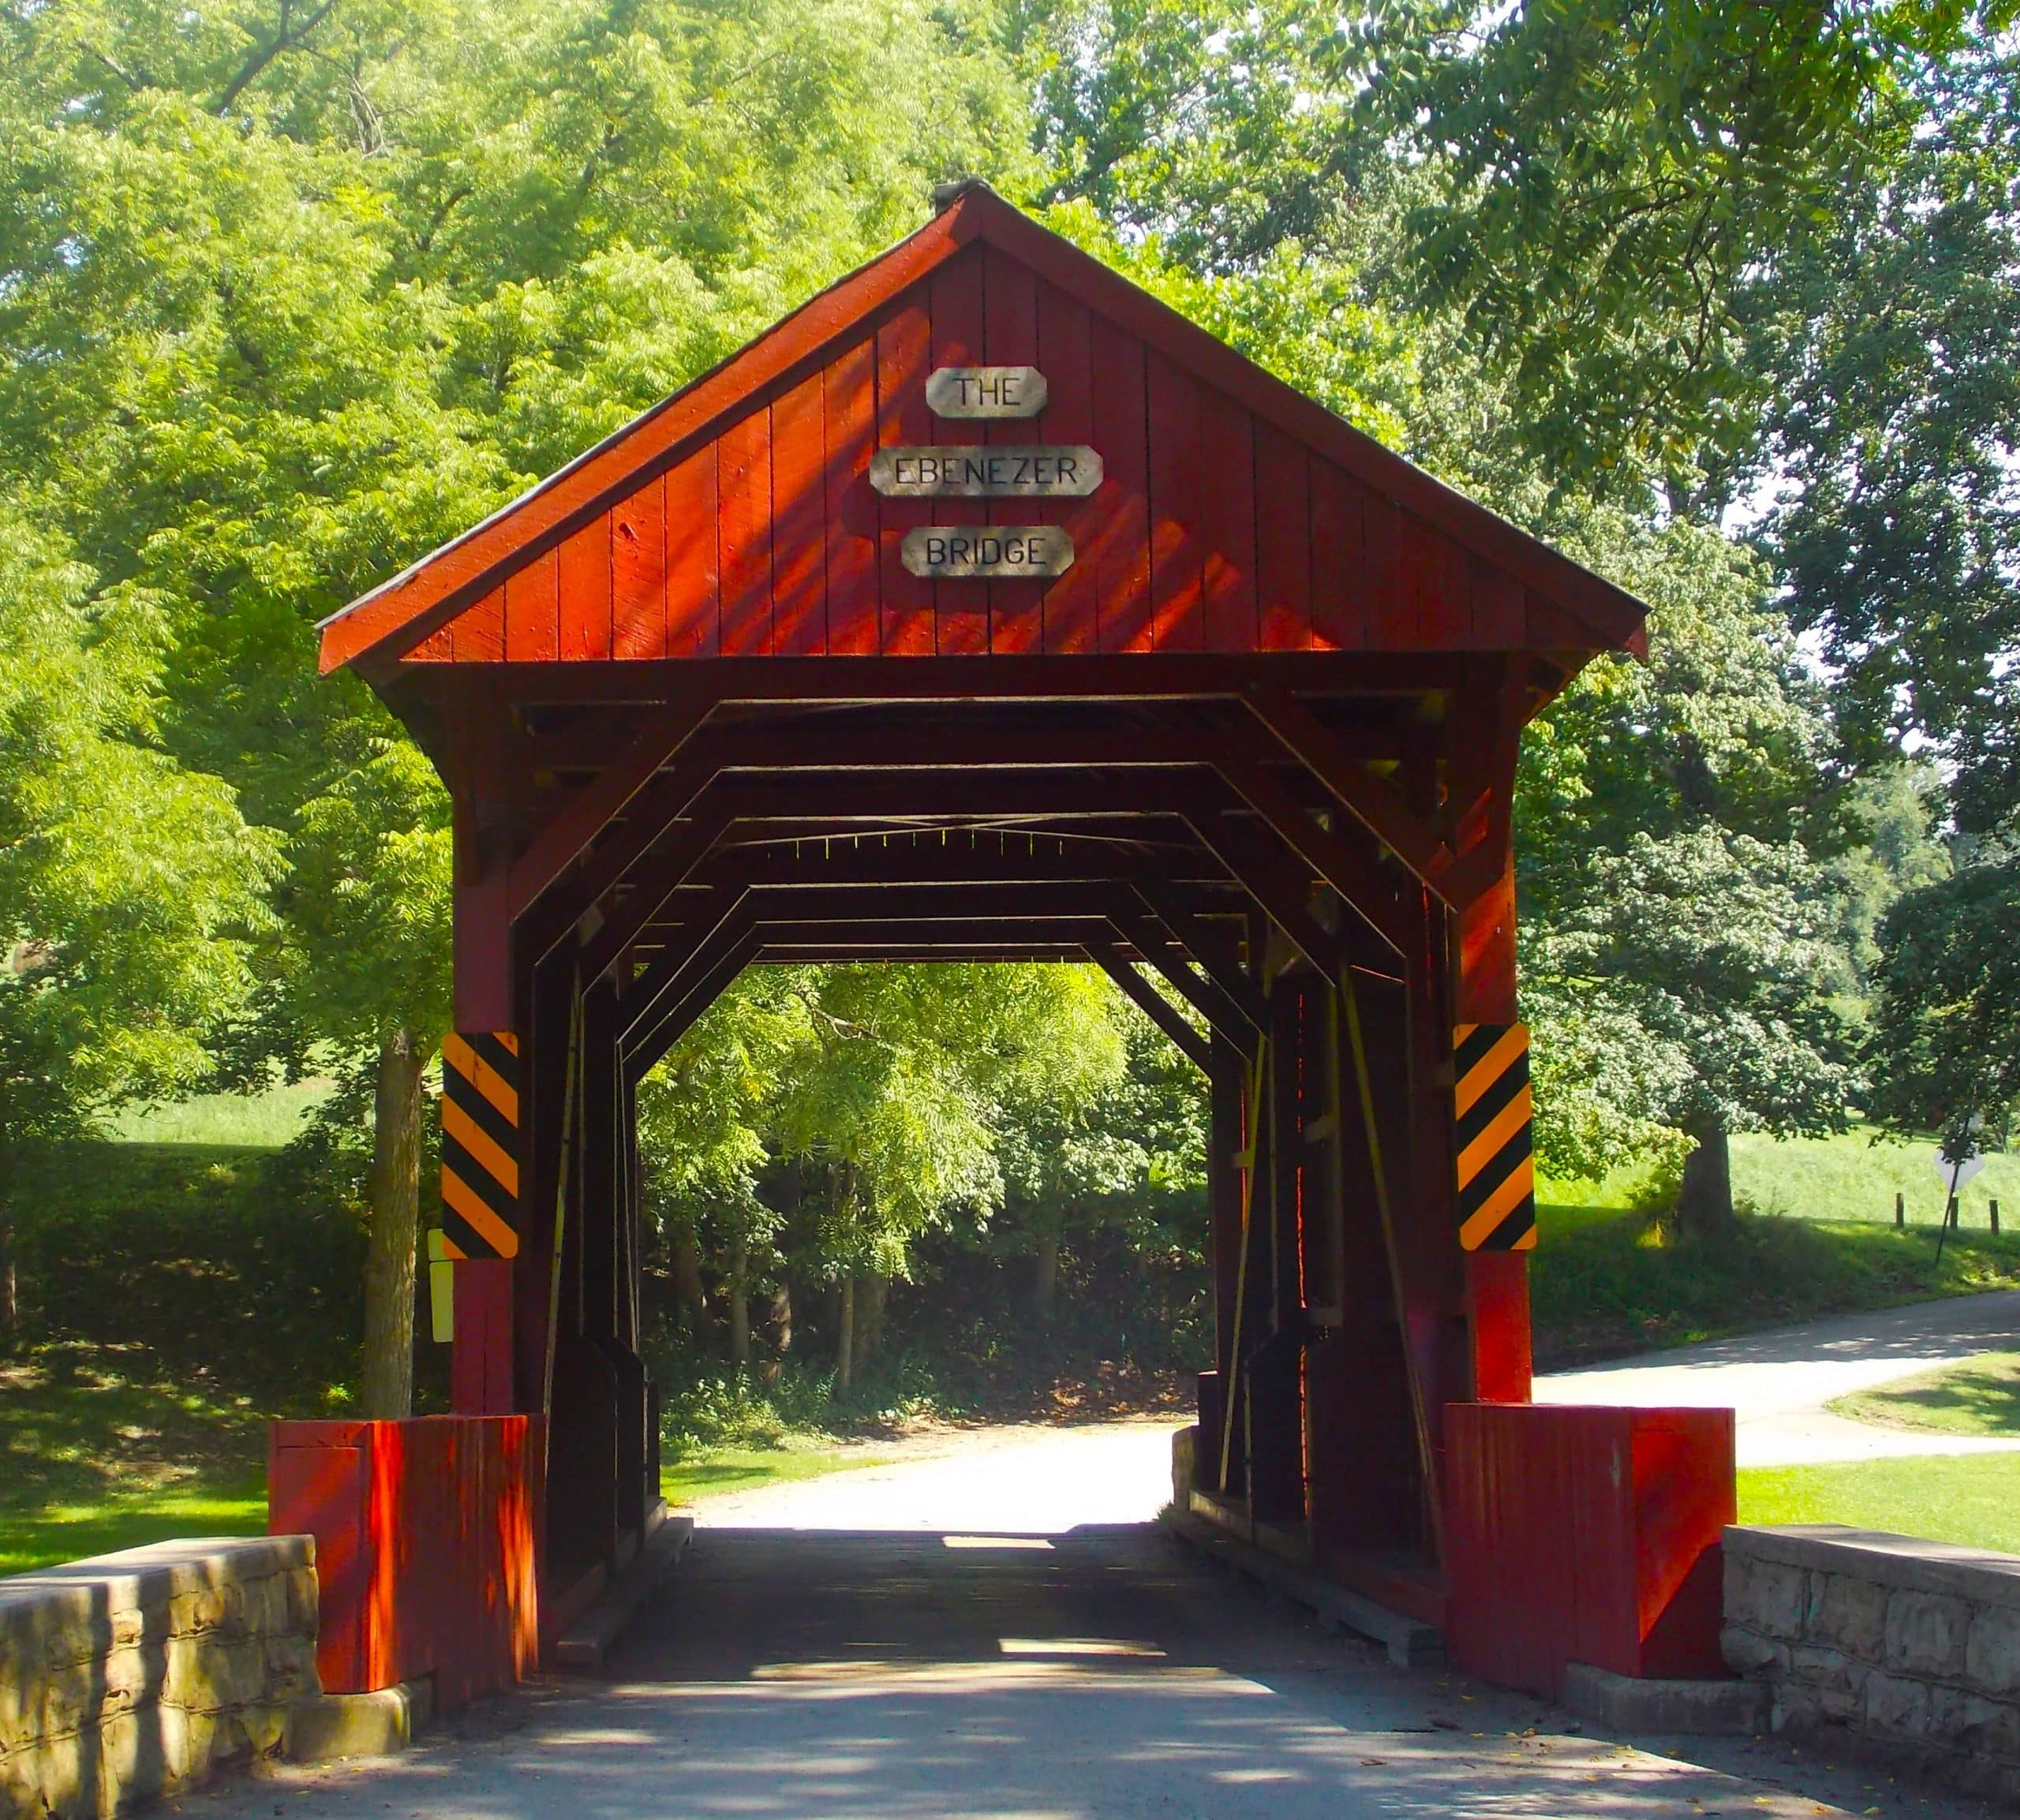 Ebenezer bridge Mingo Creek County Park Pennsylvania Covered Bridge ...